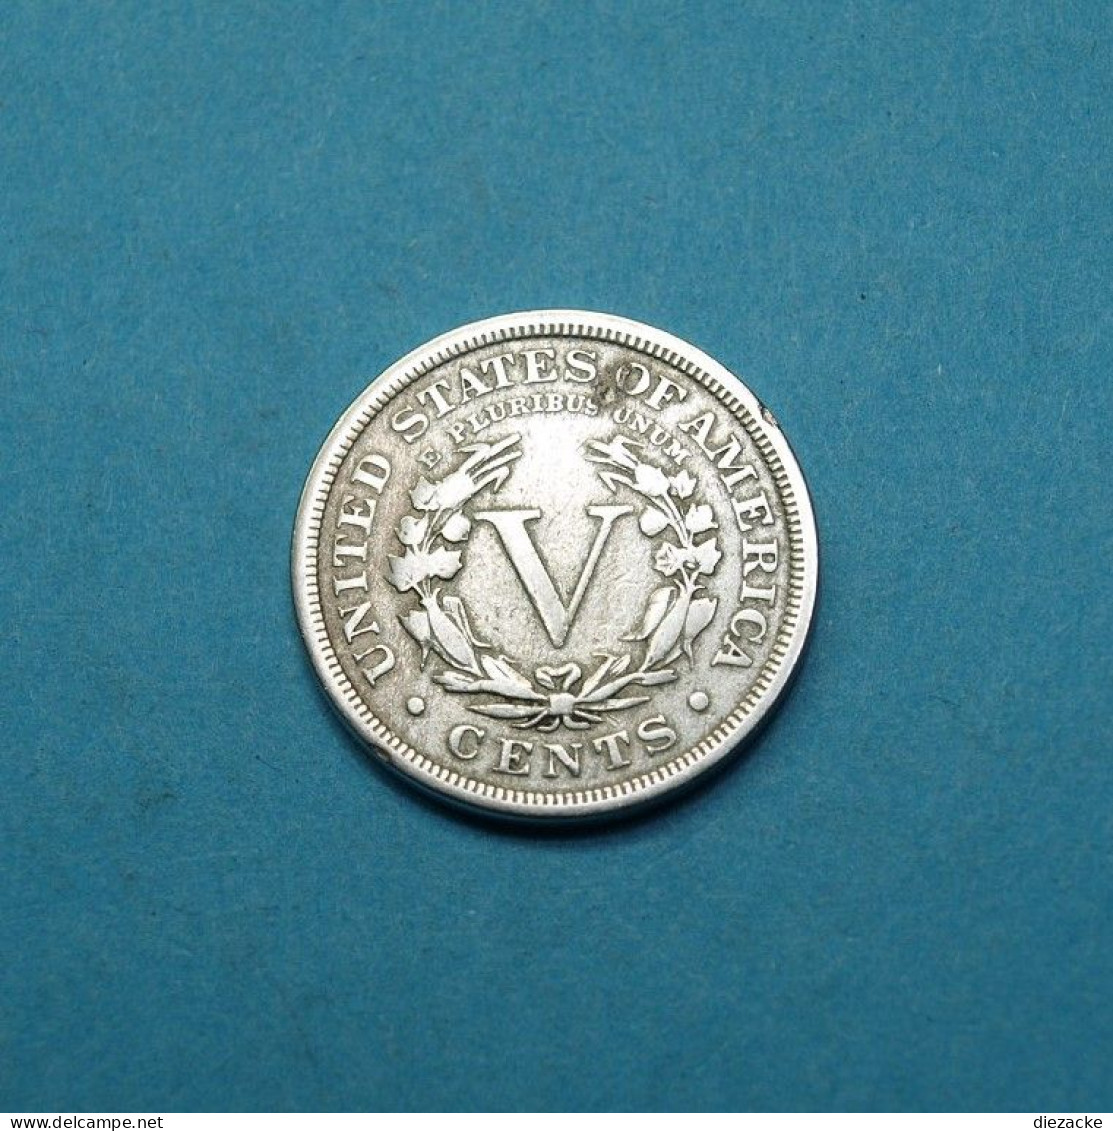 USA 1900 5 Cents V Im Kranz (Liberty Head Nickel) (M4407 - Isla Man